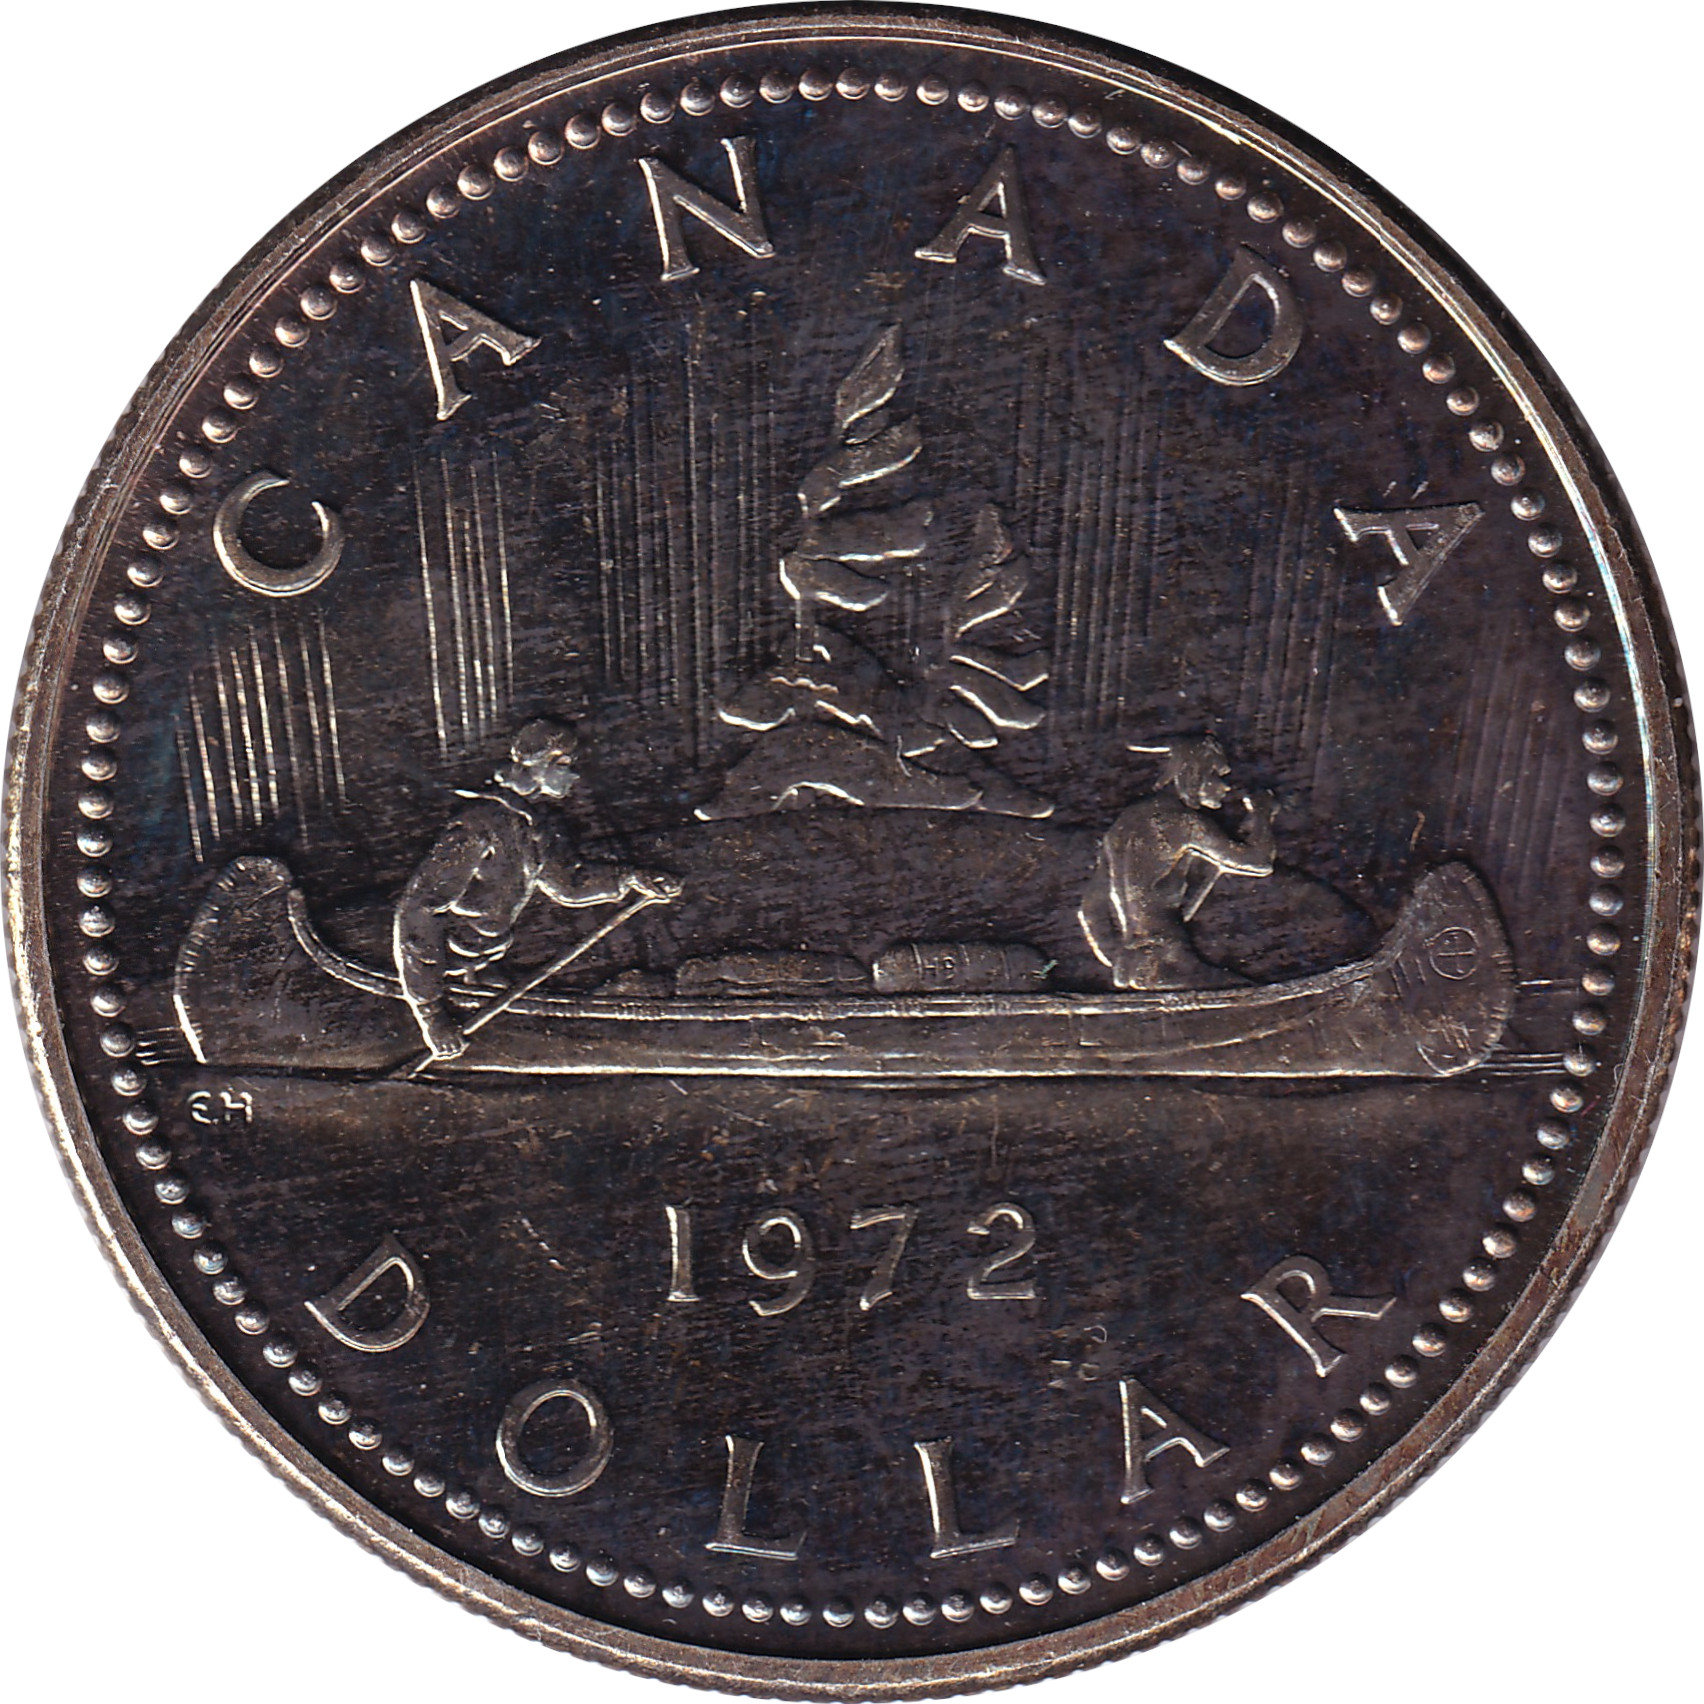 1 dollar - Elizabeth II - Mature bust - Voyageur